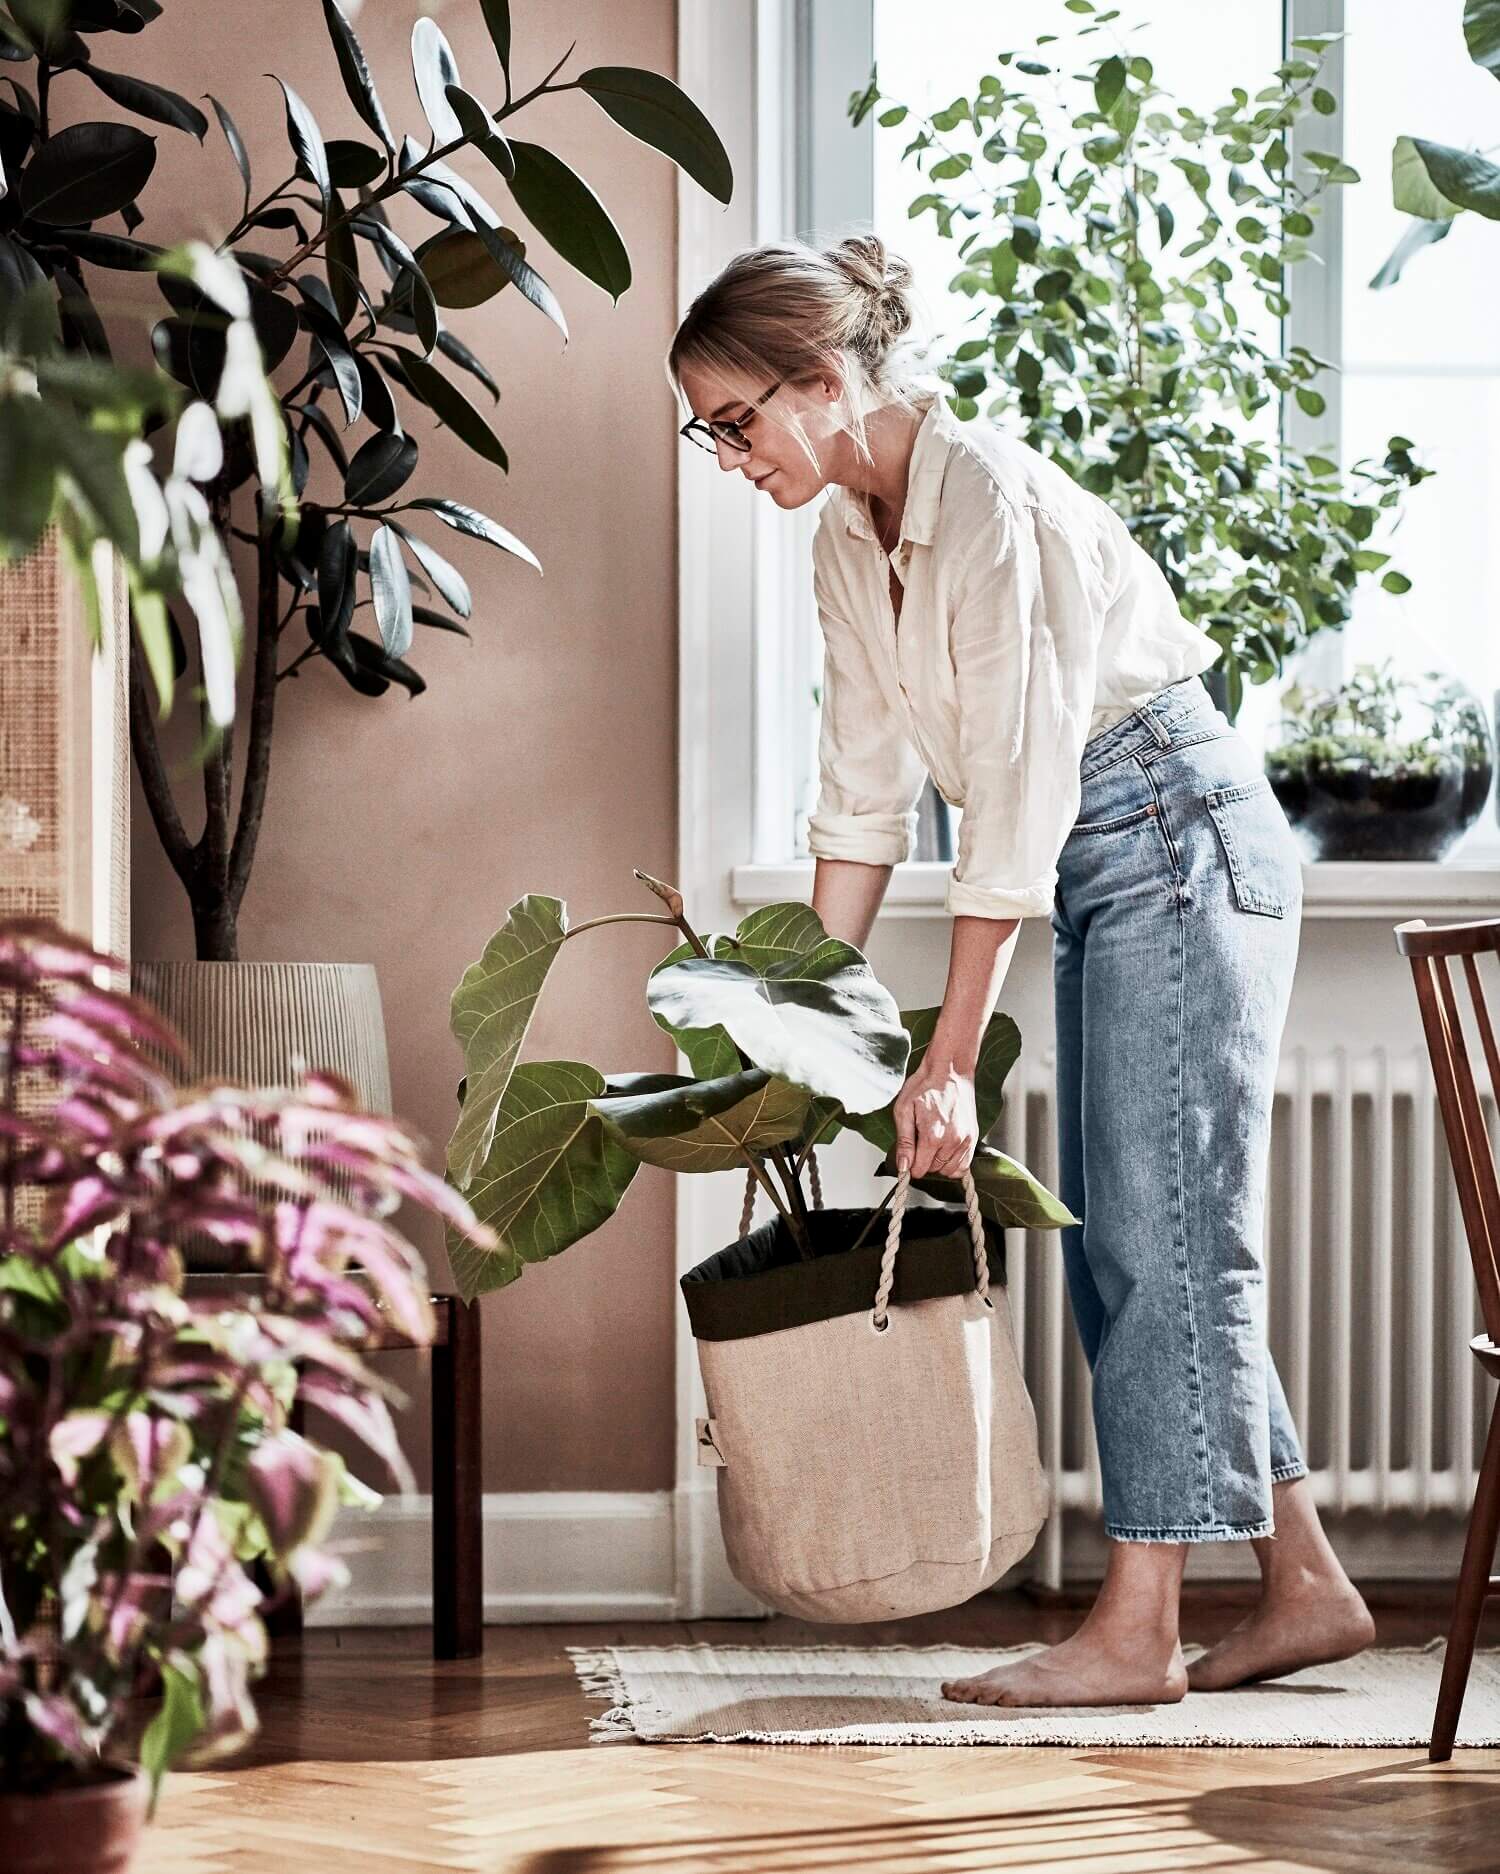 ikea botanisk collection nordroom9 Botanisk: A Handmade Indoor Gardening Collection by IKEA